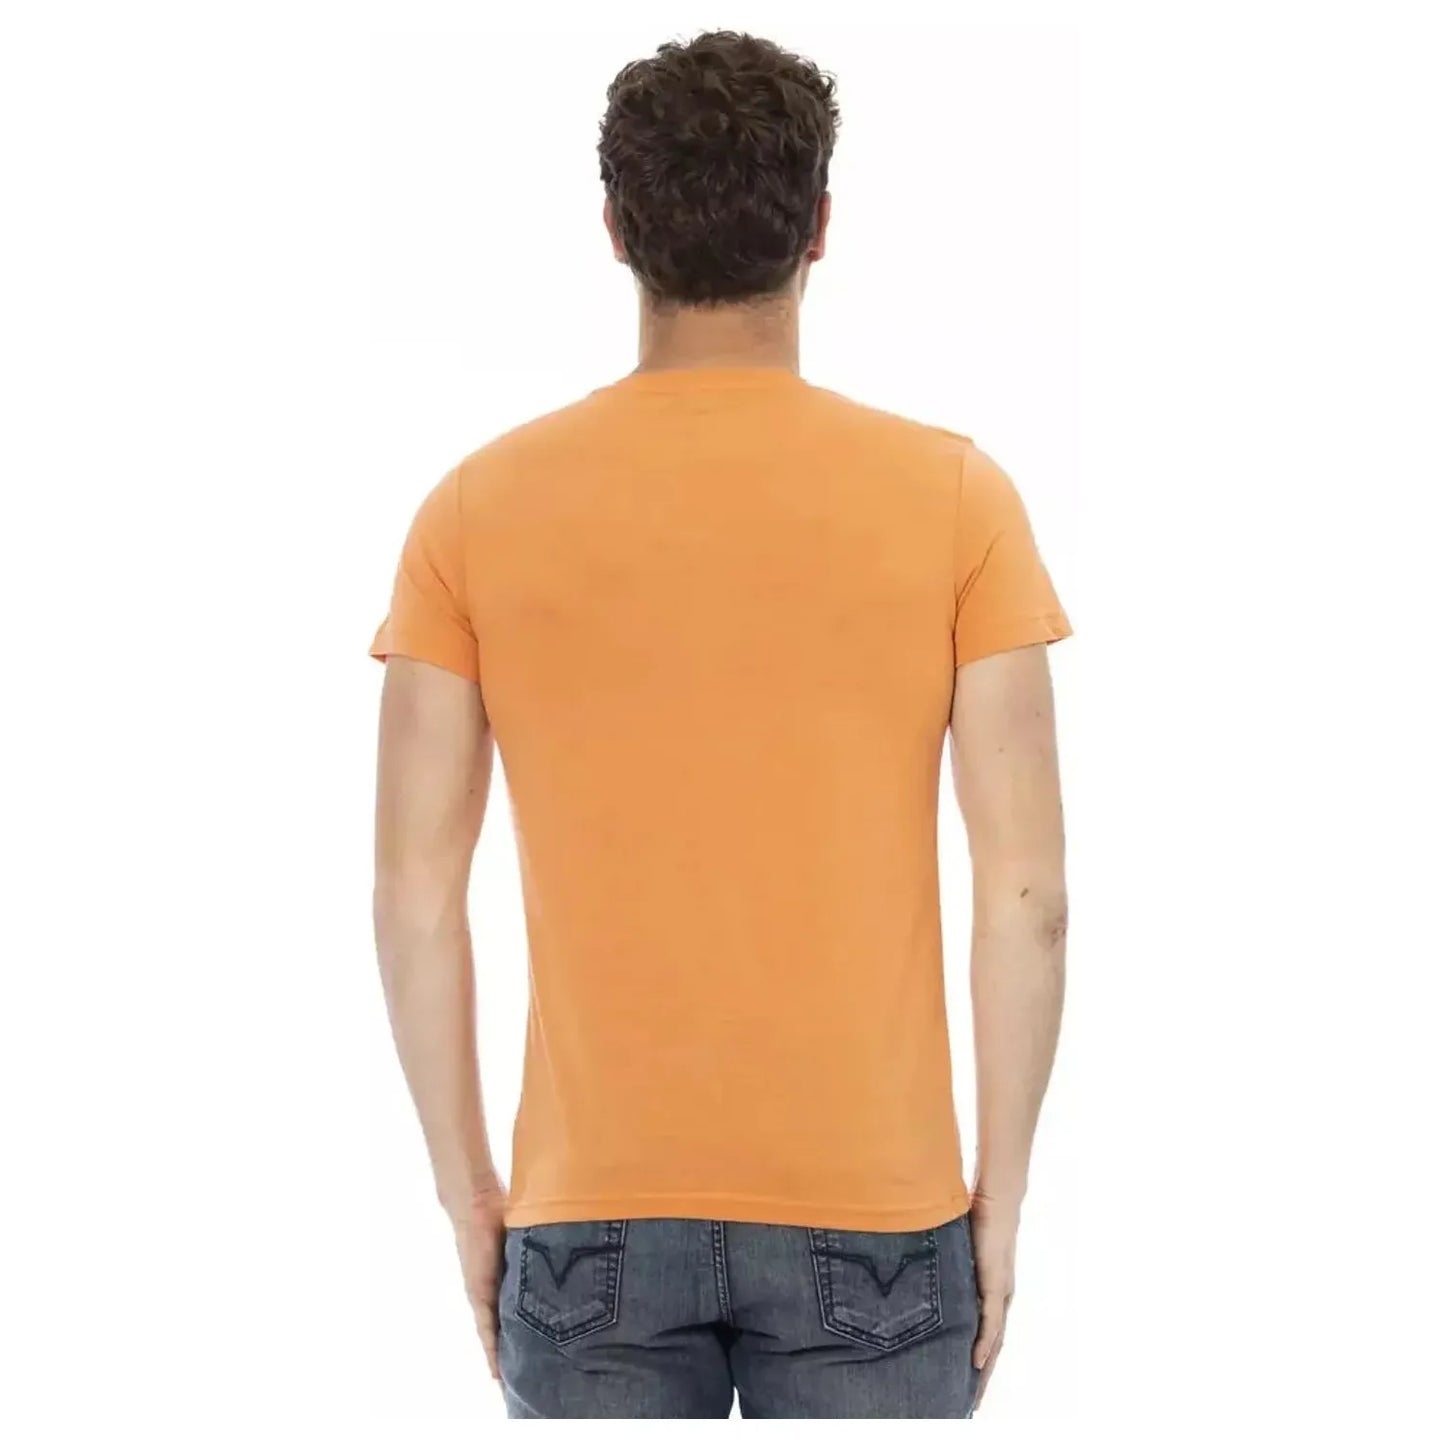 Trussardi Action Orange V-Neck Tee with Front Print orange-cotton-t-shirt-23